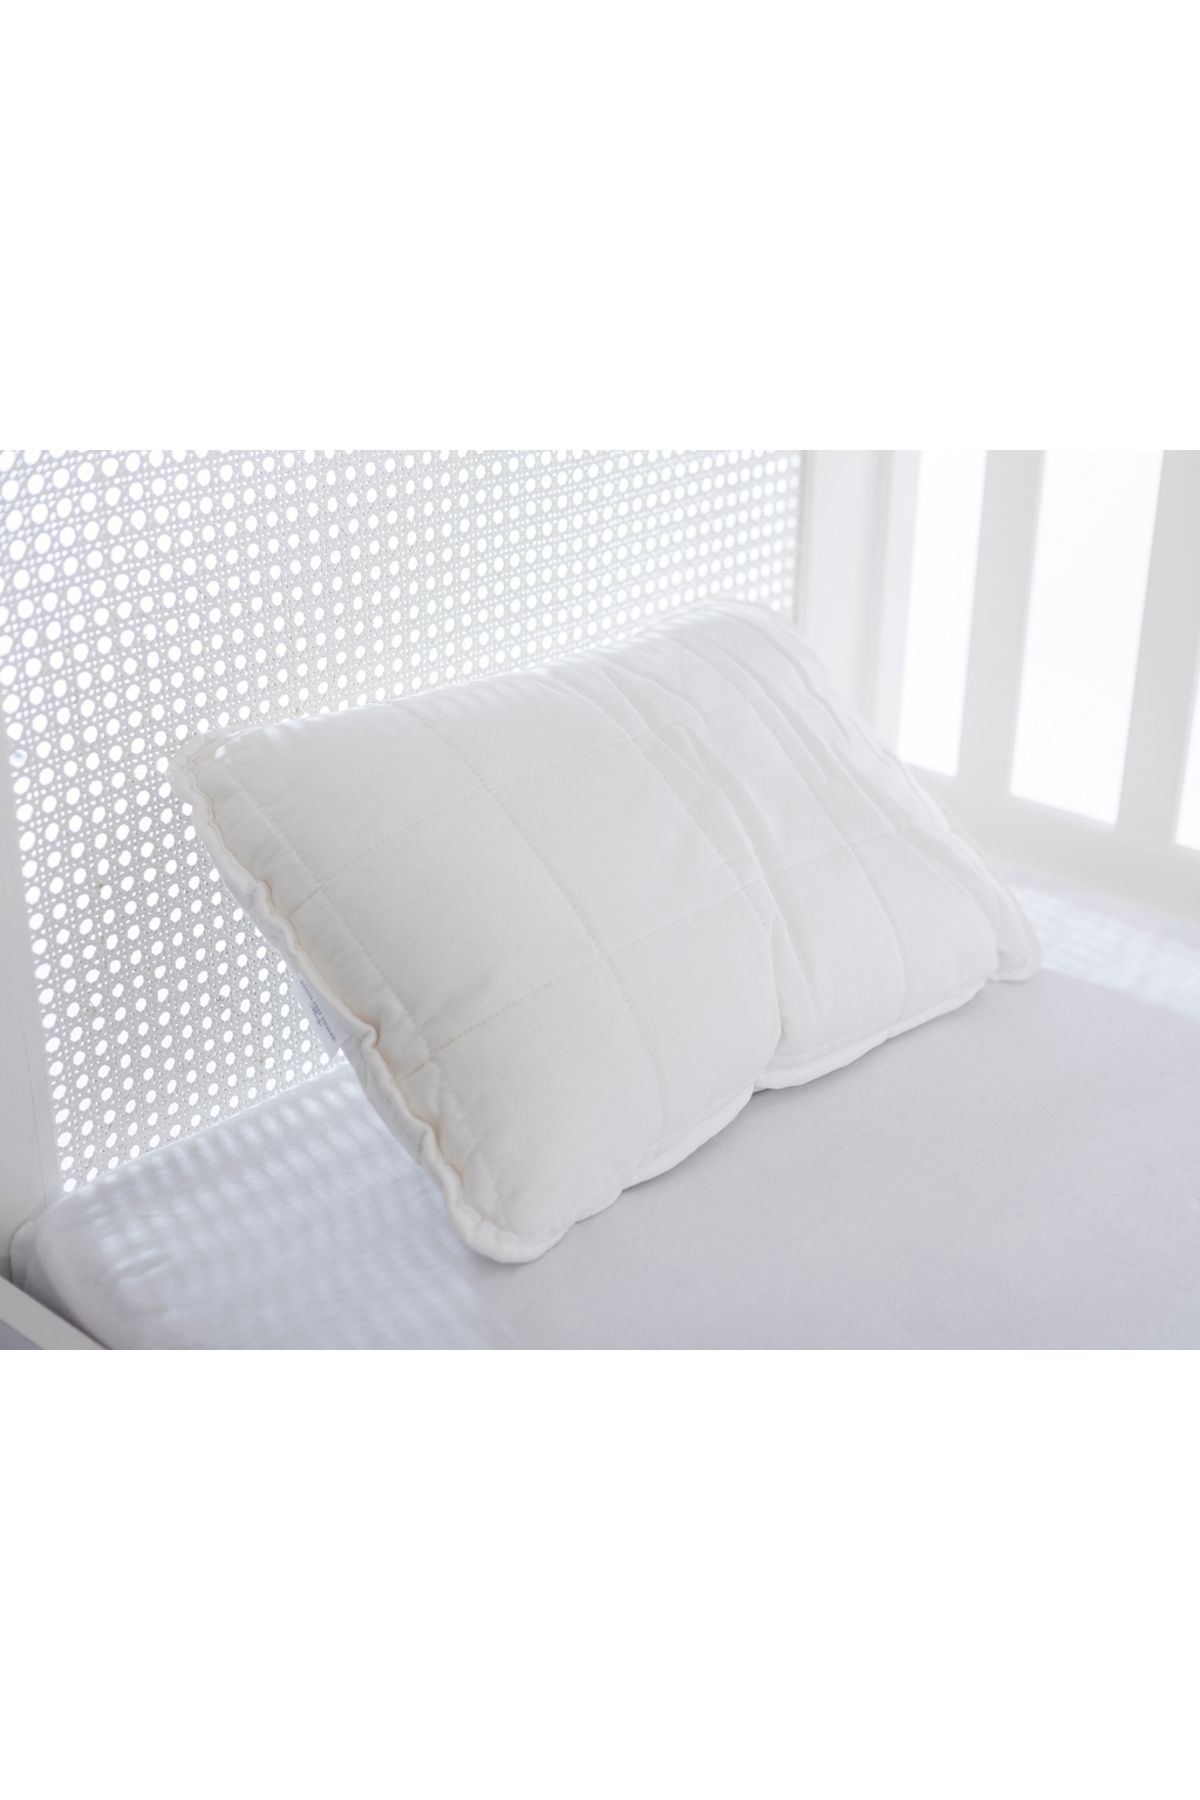 English Home Comfy Pamuk Bebe Yastık 35x45 Cm Beyaz